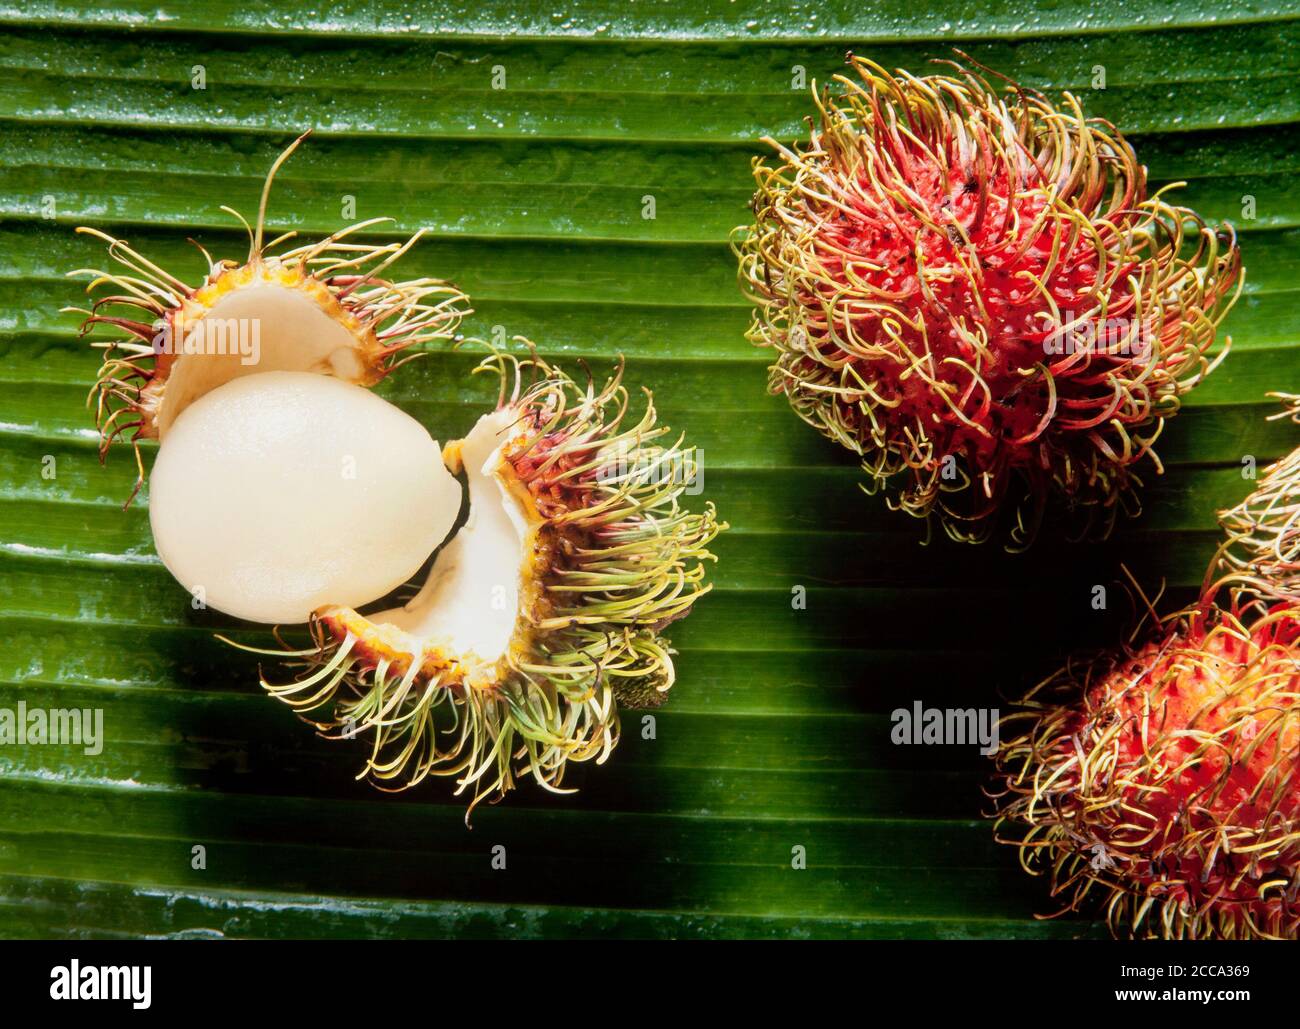 Rambutan fruit, Nephelium lappaceum, Stock Photo